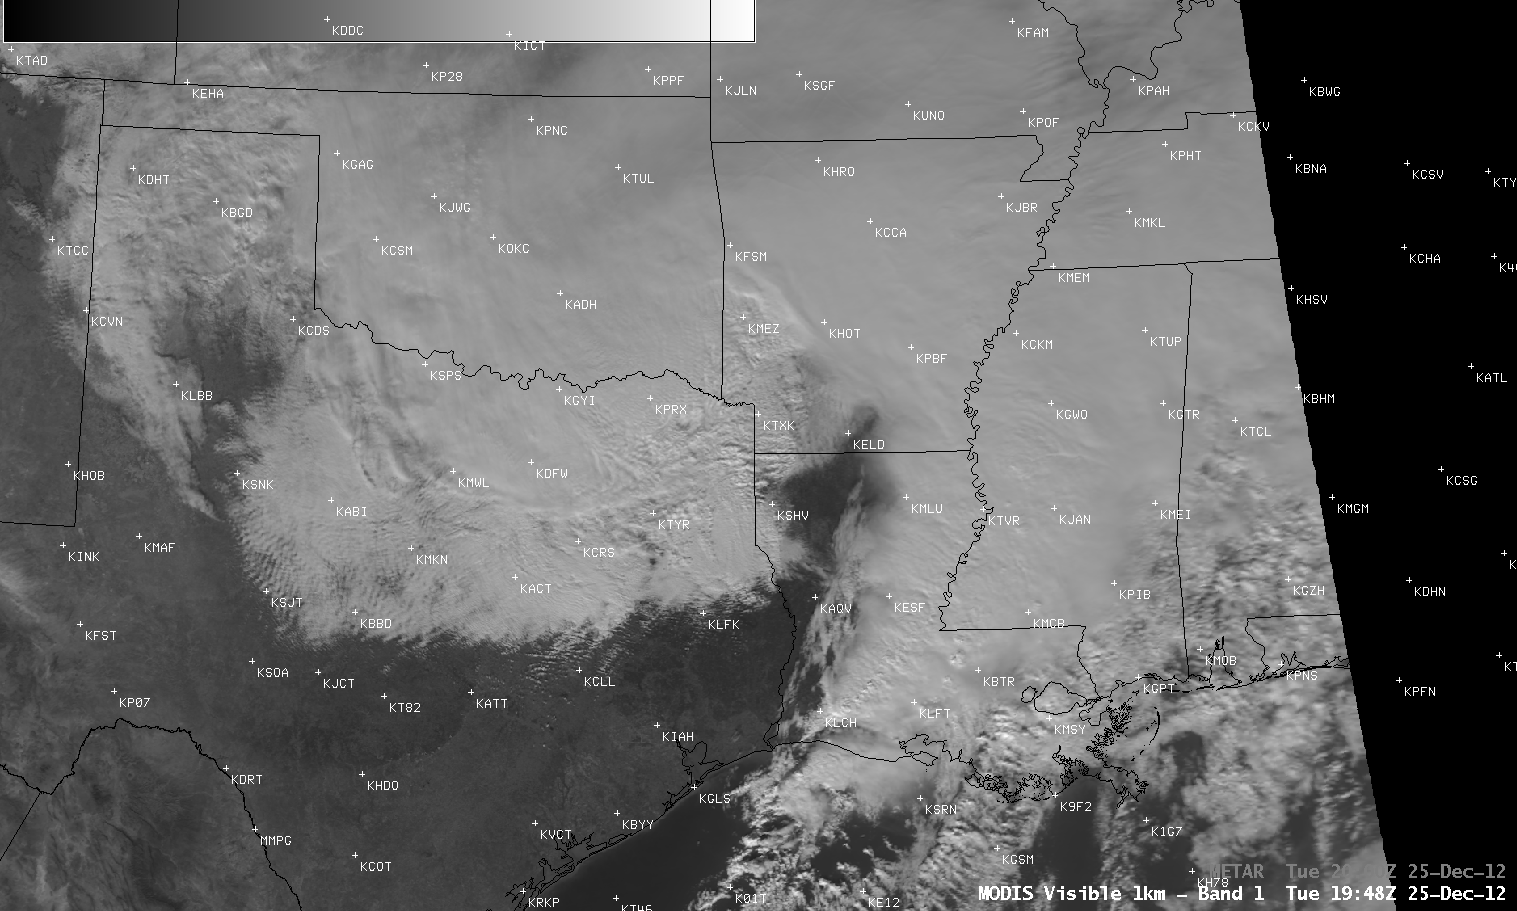 MODIS 0.65 Âµm visible, 11.0 Âµm IR, and 6.7 Âµm water vapor images